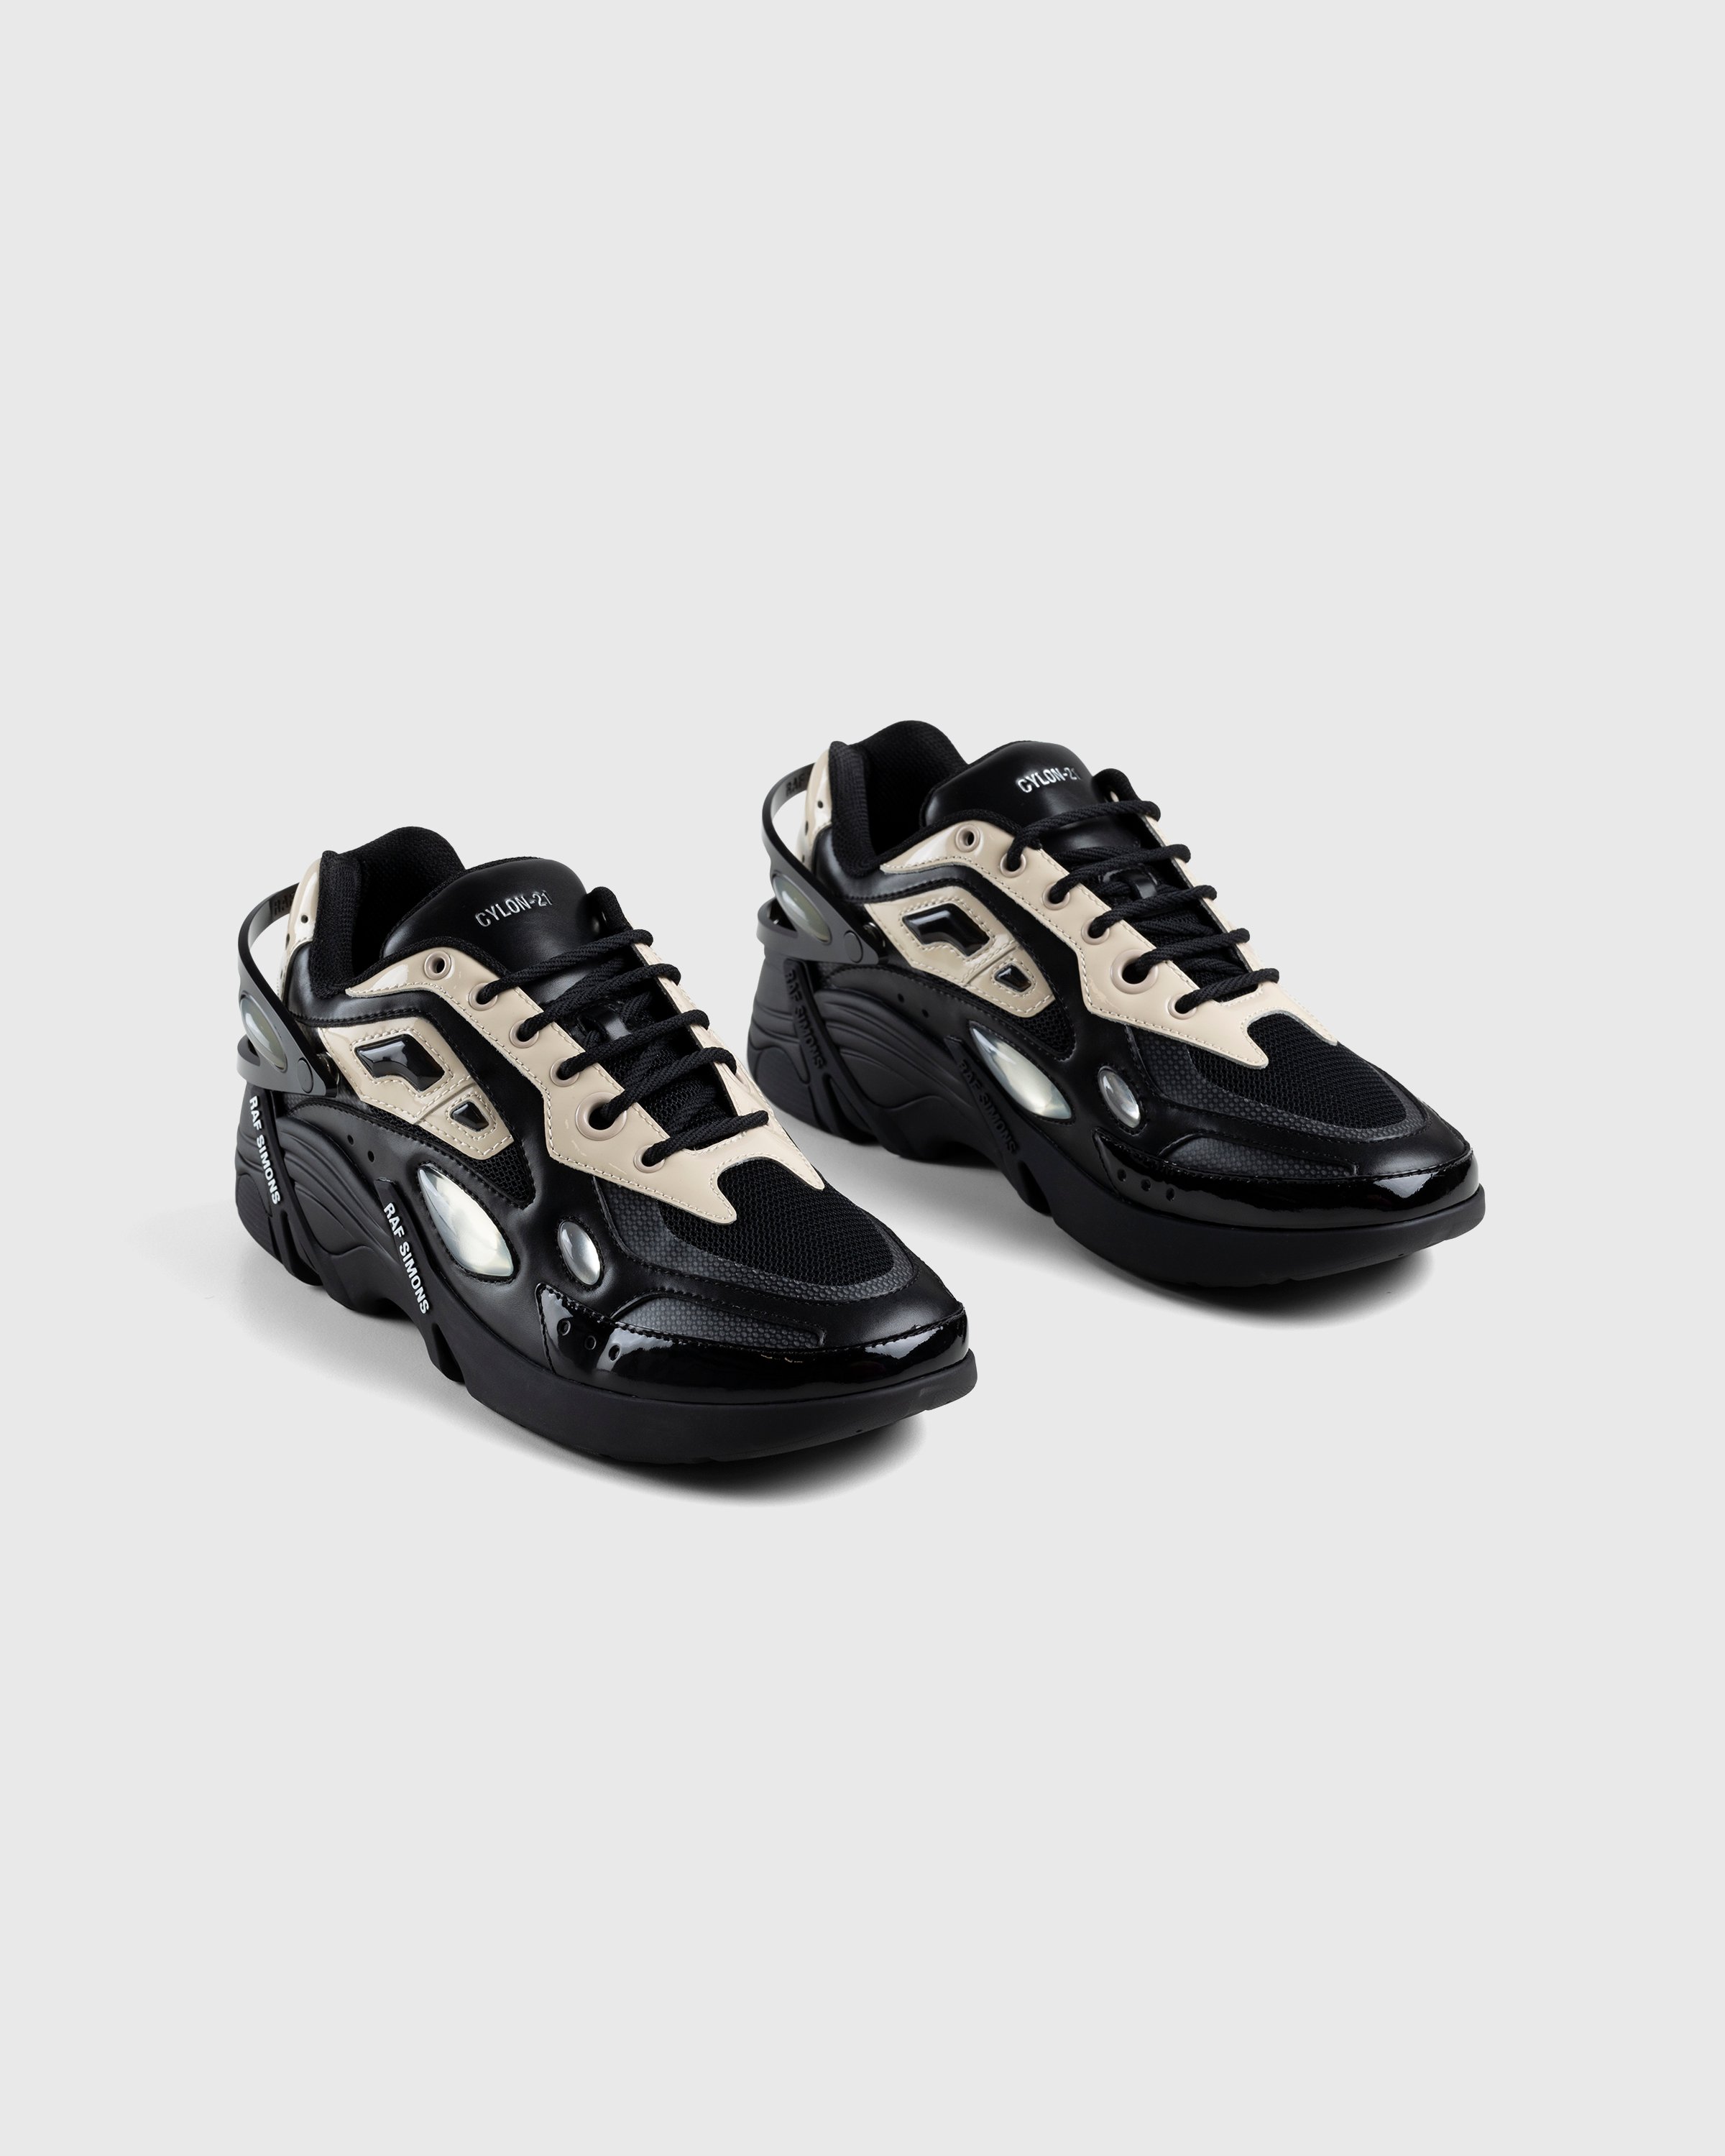 Raf Simons - Cylon 21 Cream/Black - Footwear - Multi - Image 3